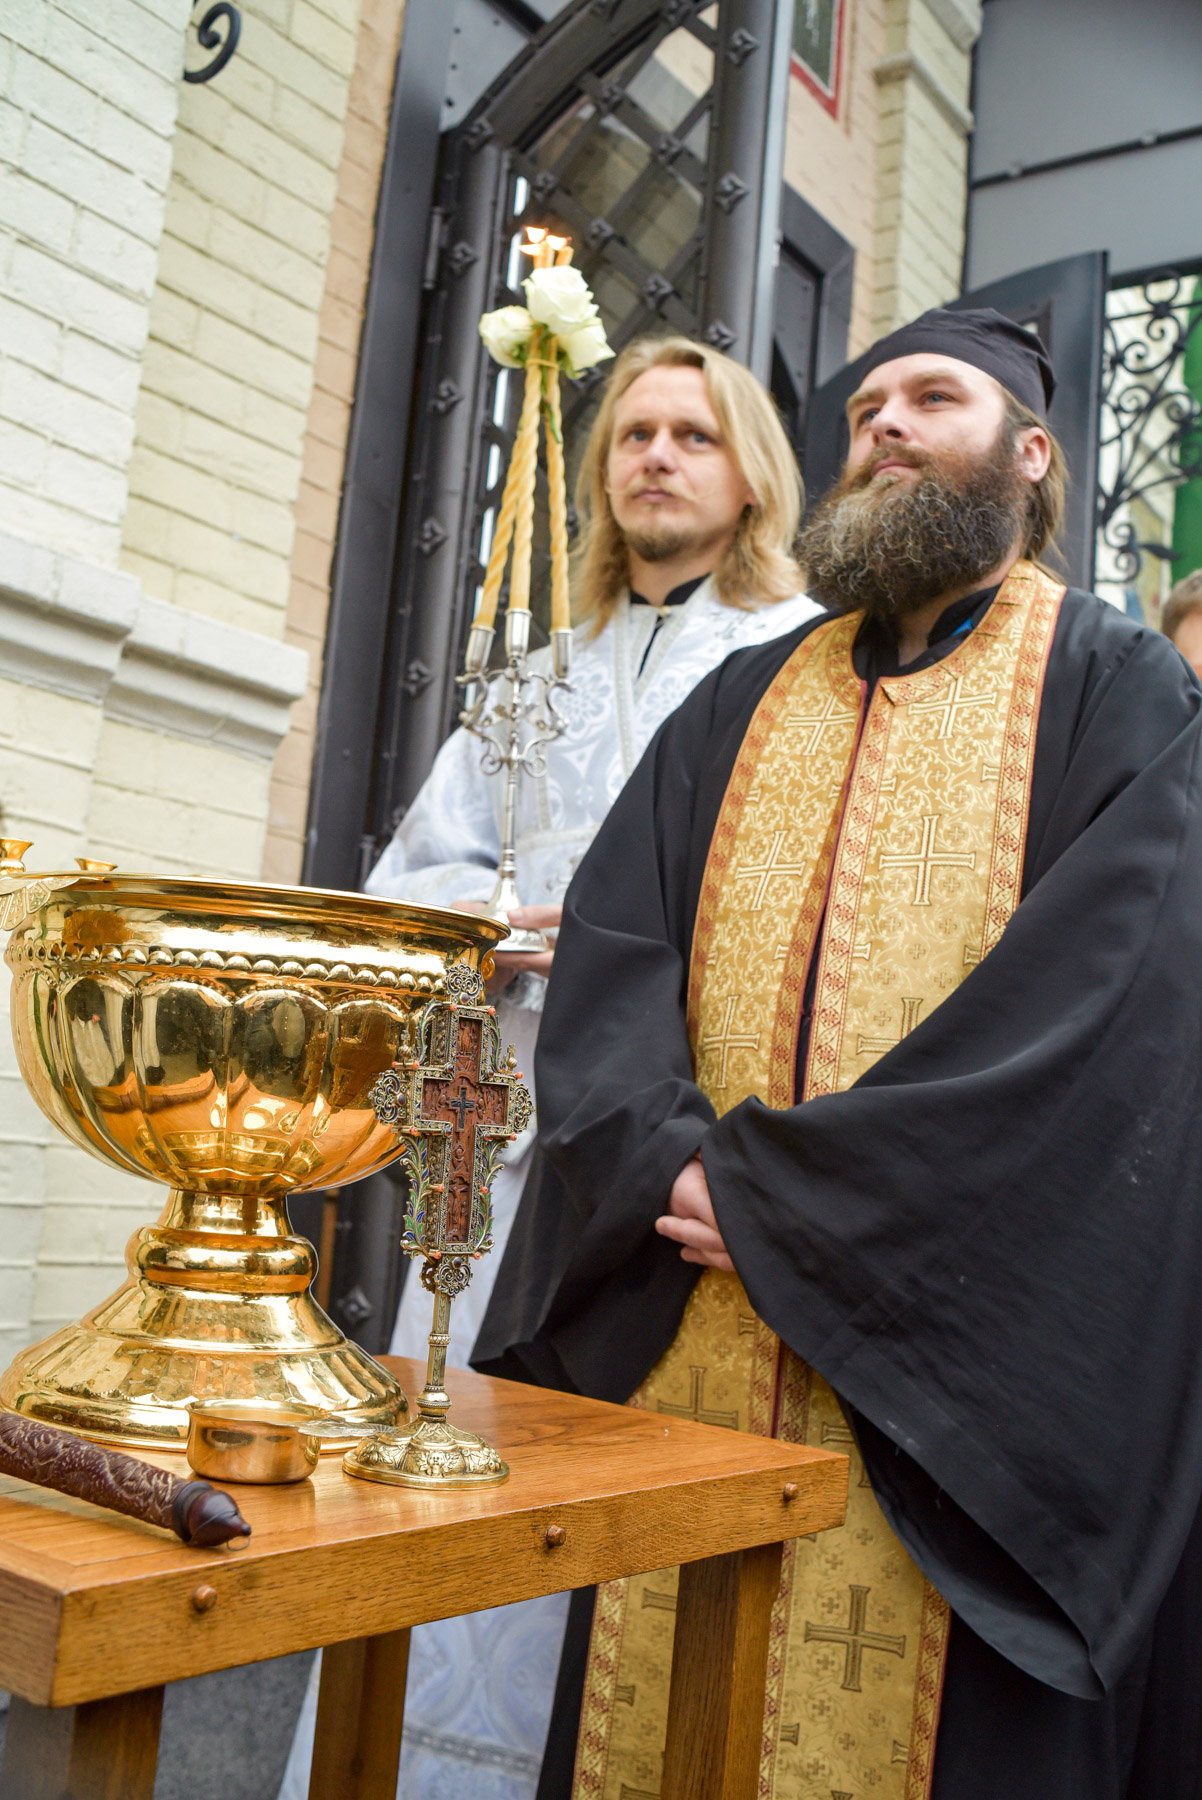 photos of orthodox christmas 0151 1